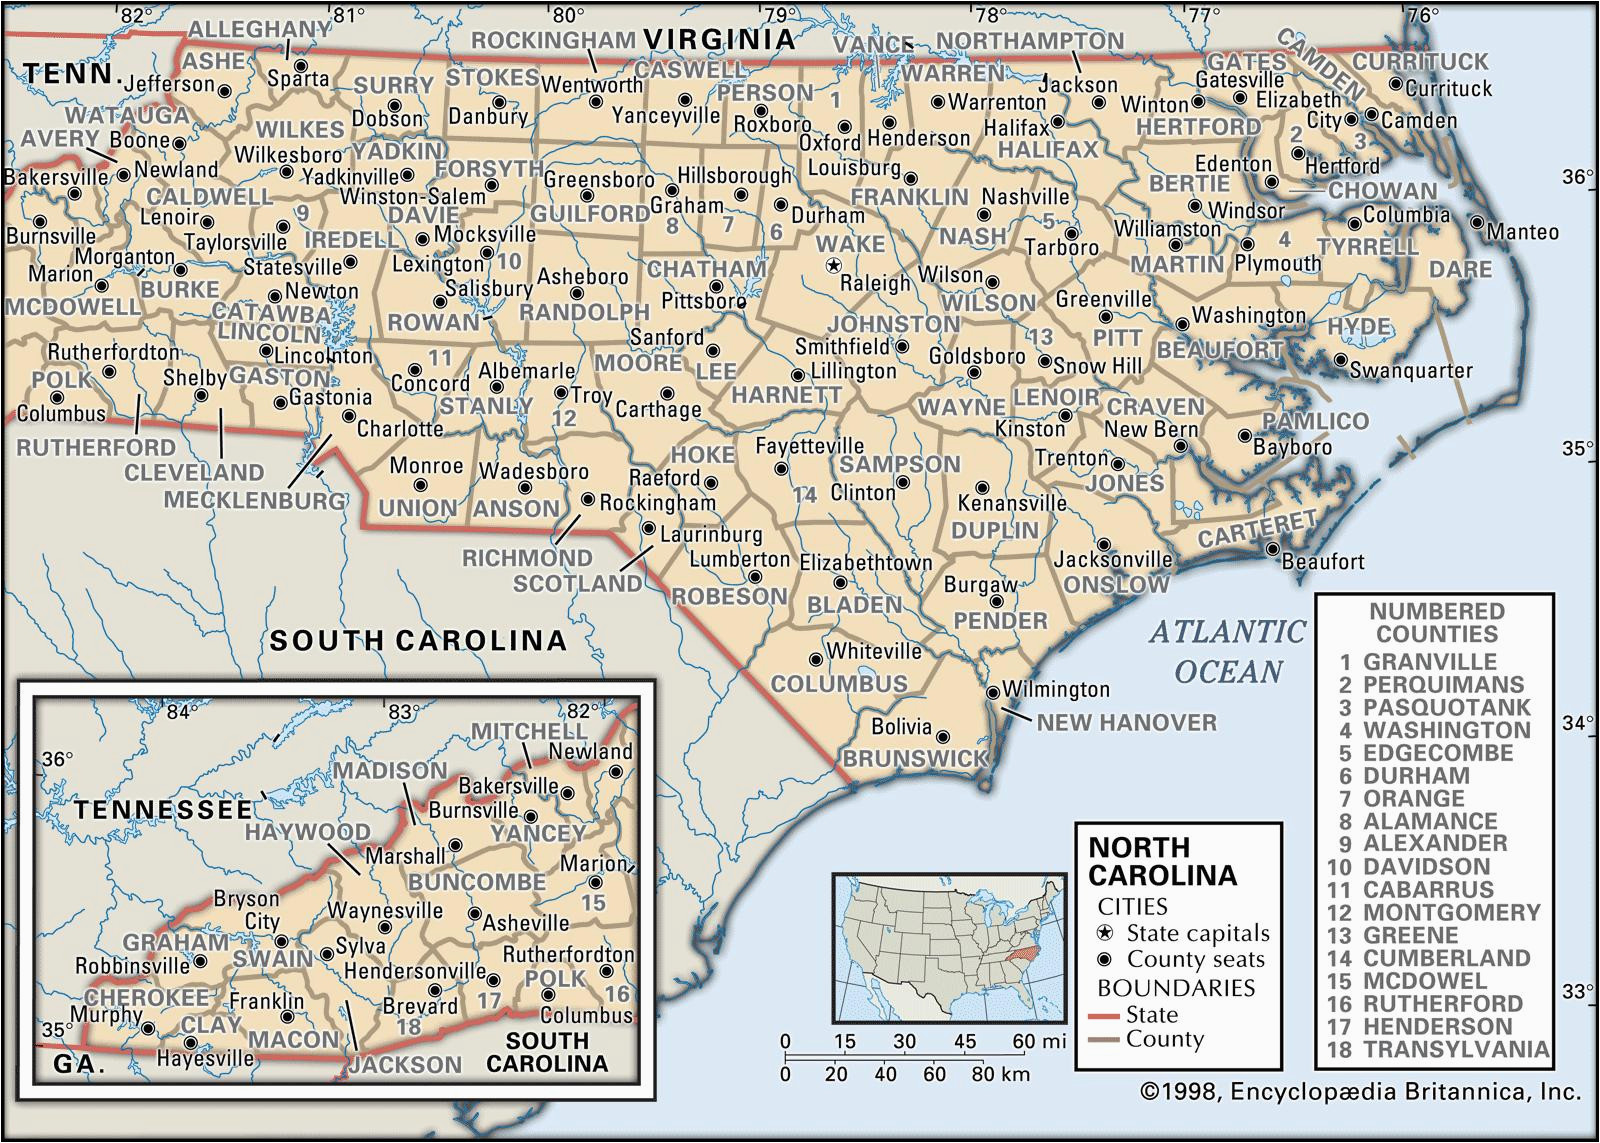 Tryon north Carolina Map | secretmuseum